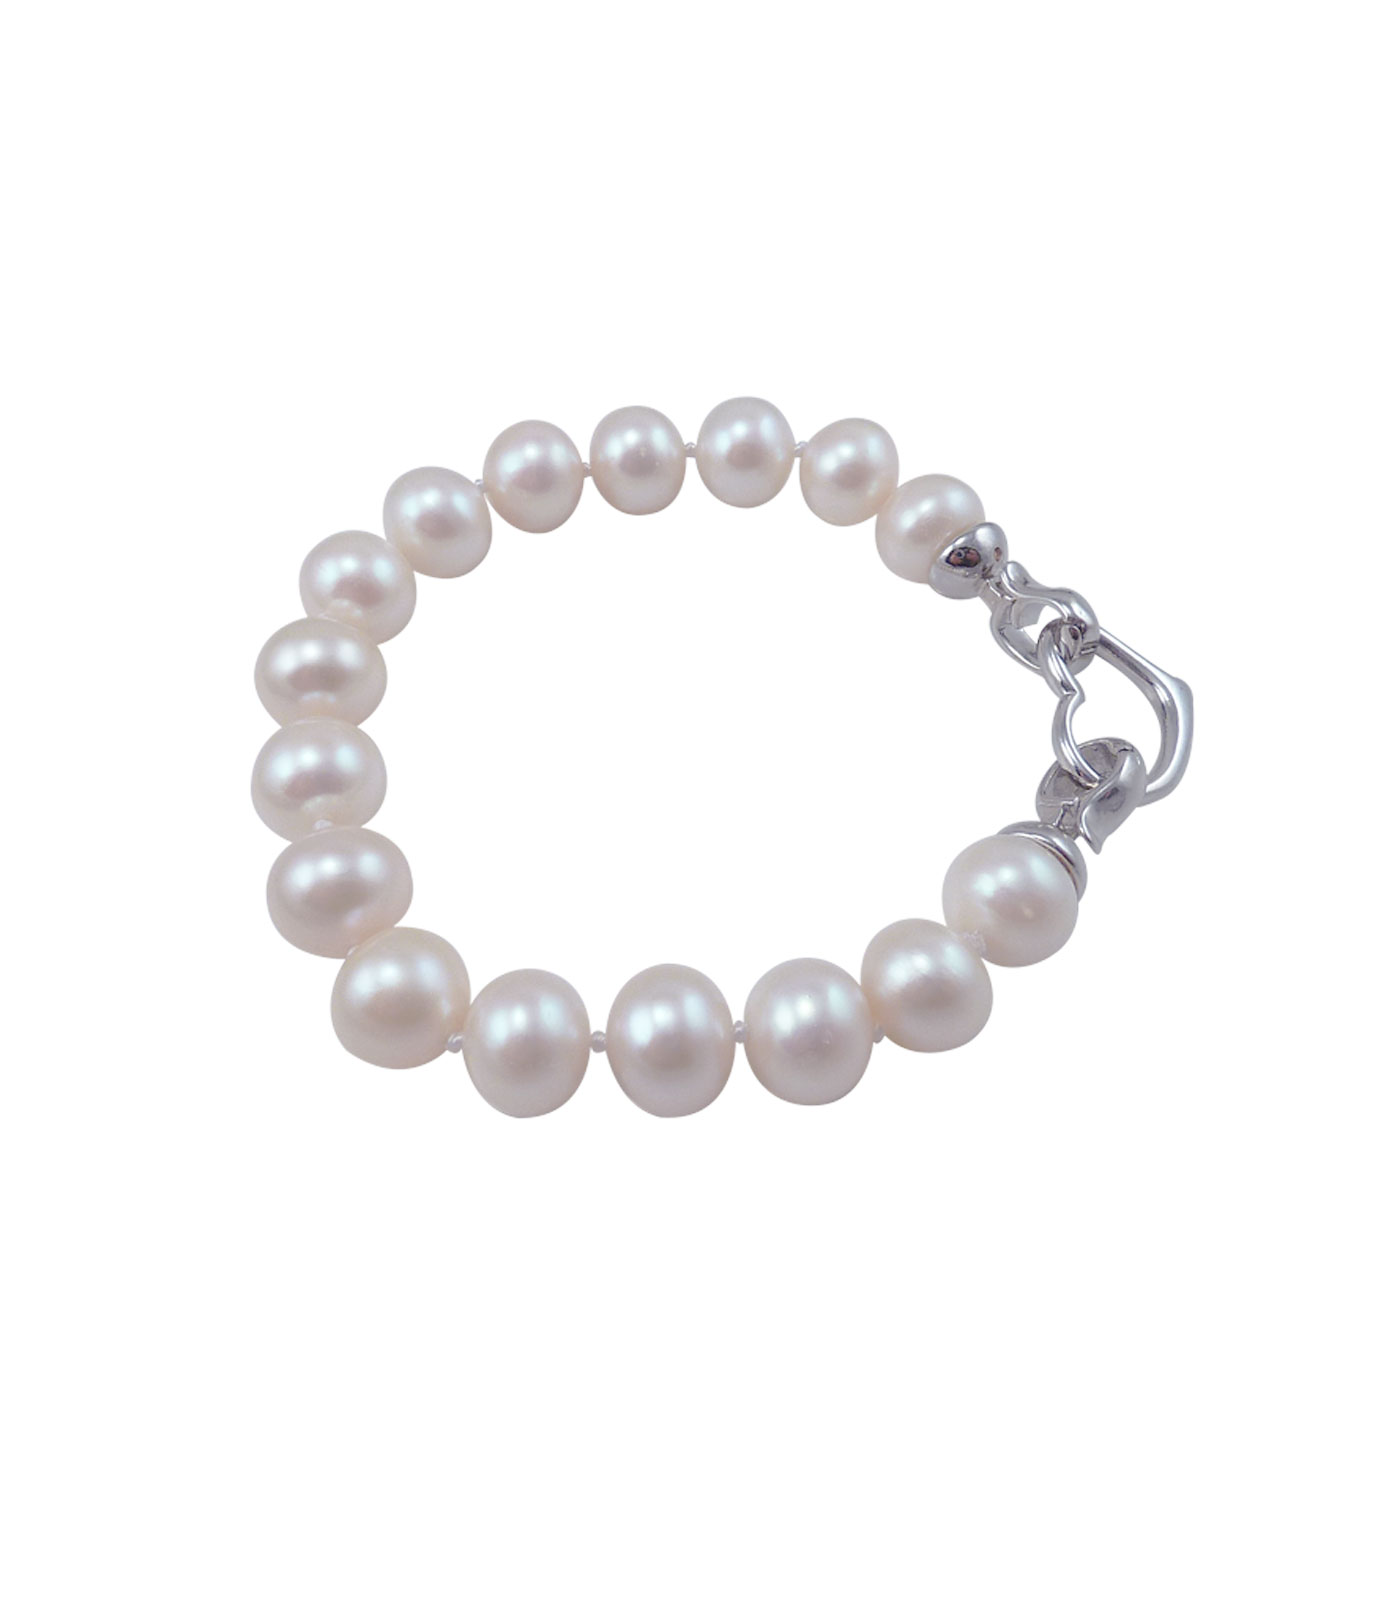 Pearl bracelet white big freshwater pearls. Modern pearl jewelry